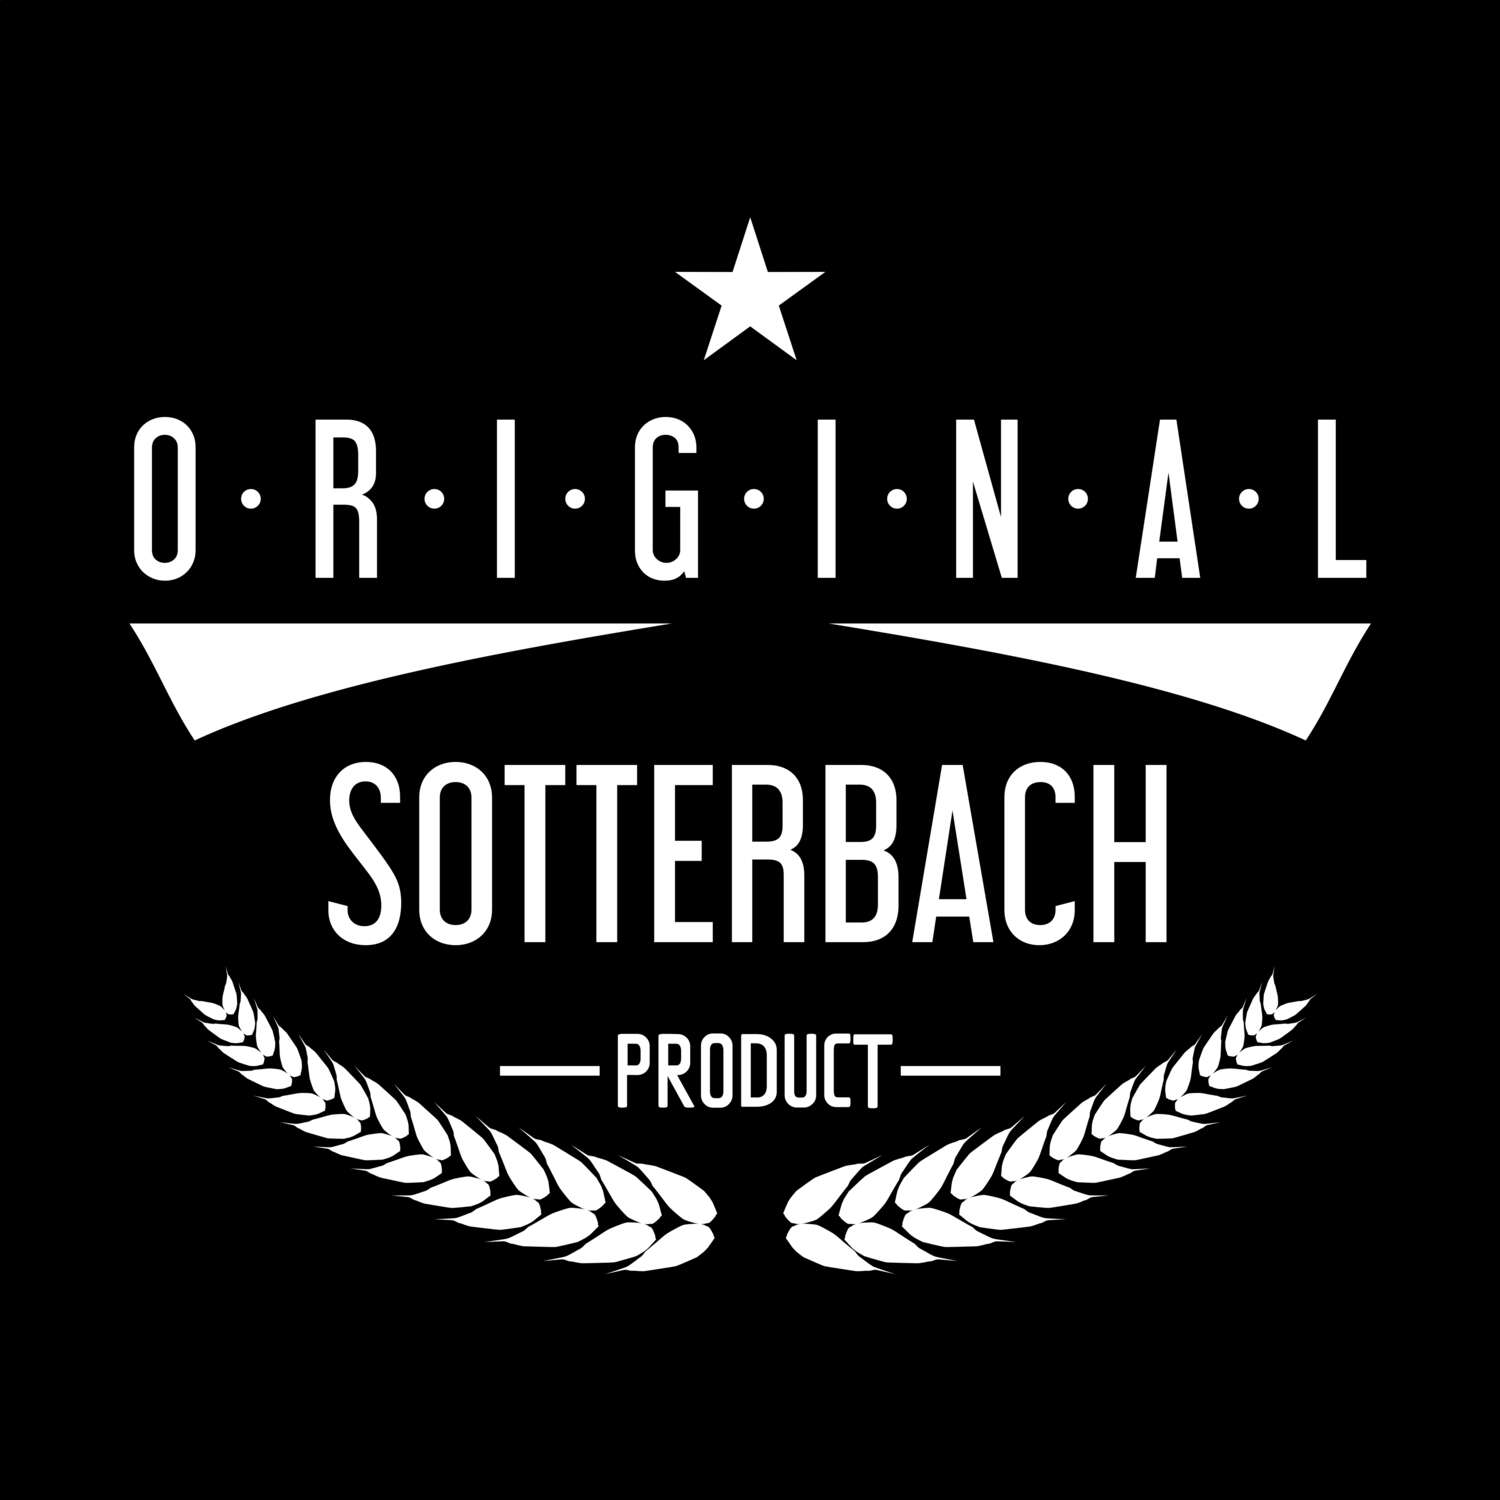 Sotterbach T-Shirt »Original Product«